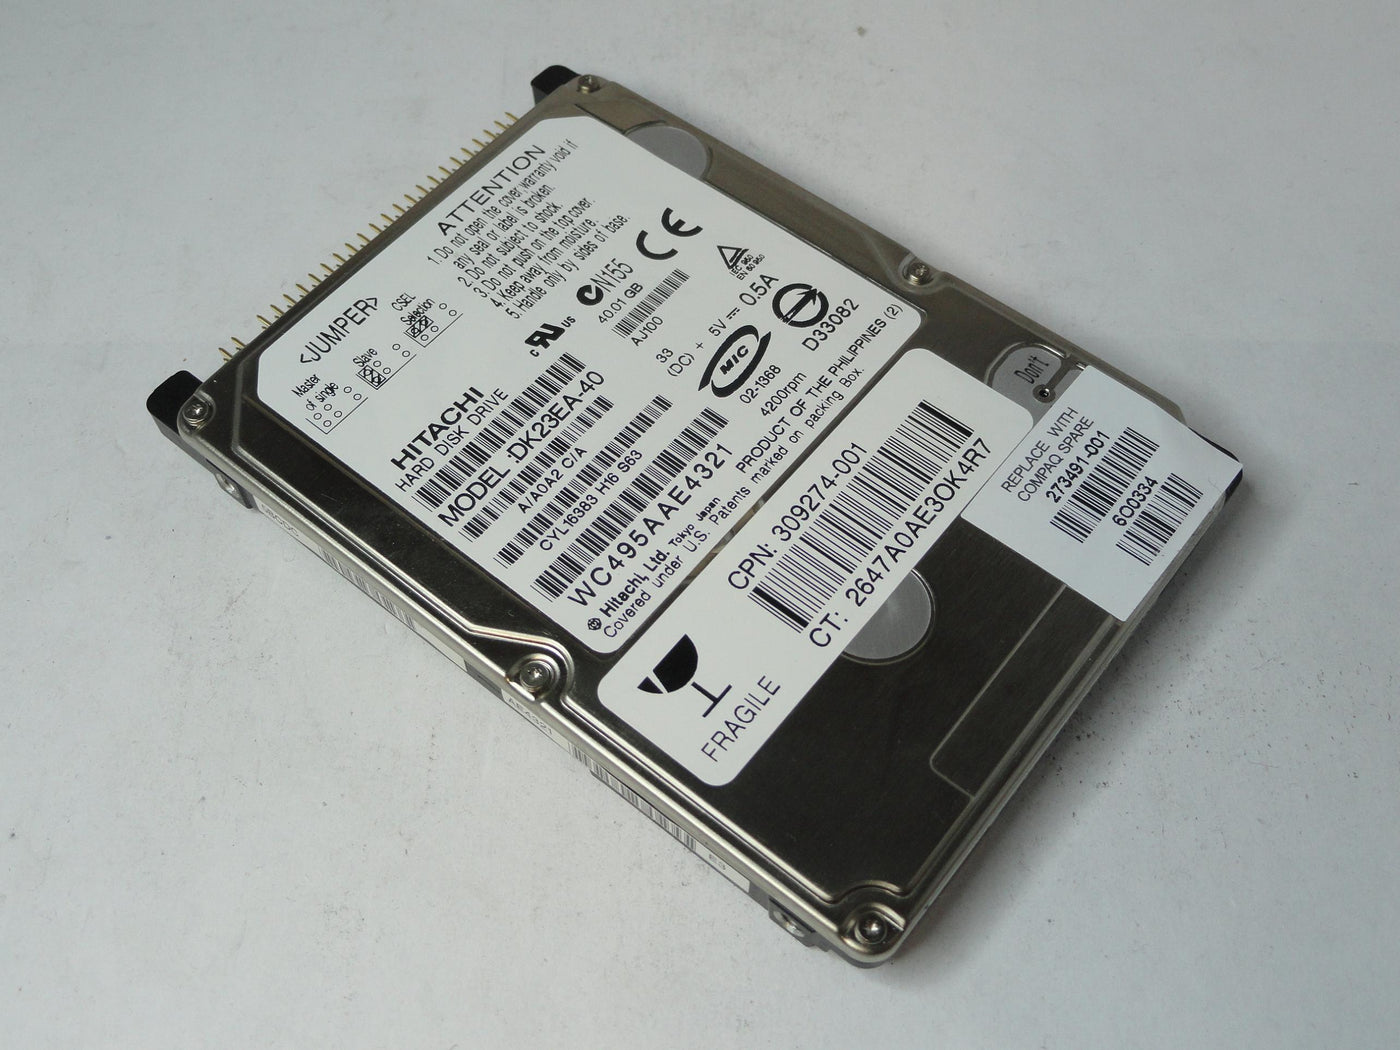 Hitachi Compaq 40Gb IDE 4200rpm 2.5in HDD ( DK23EA-40 273491-001 309274-001 ) REF